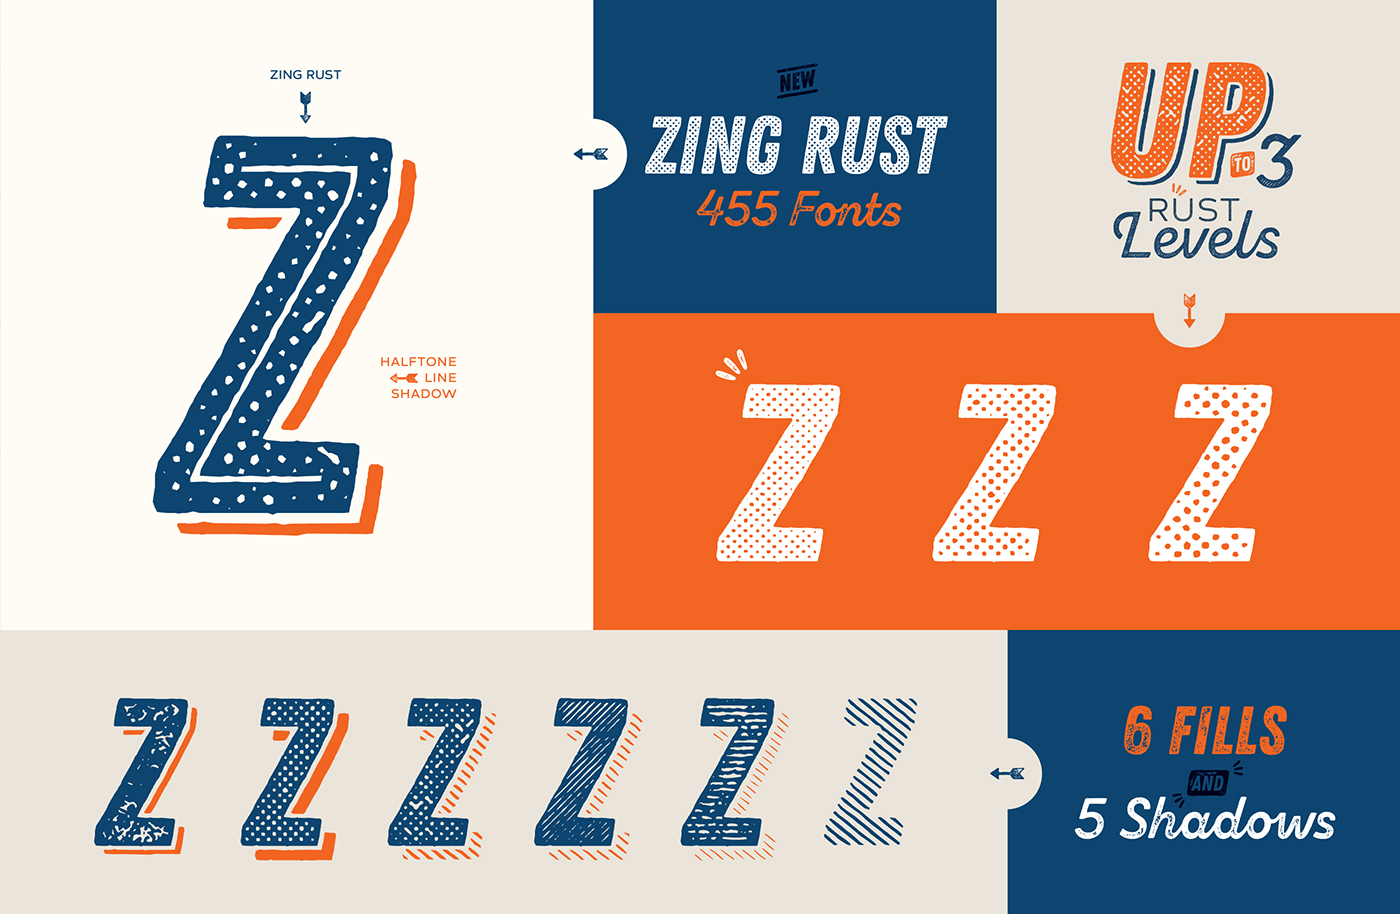 typography   font rust grunge Free font Typeface bundle zing rust Script sans serif